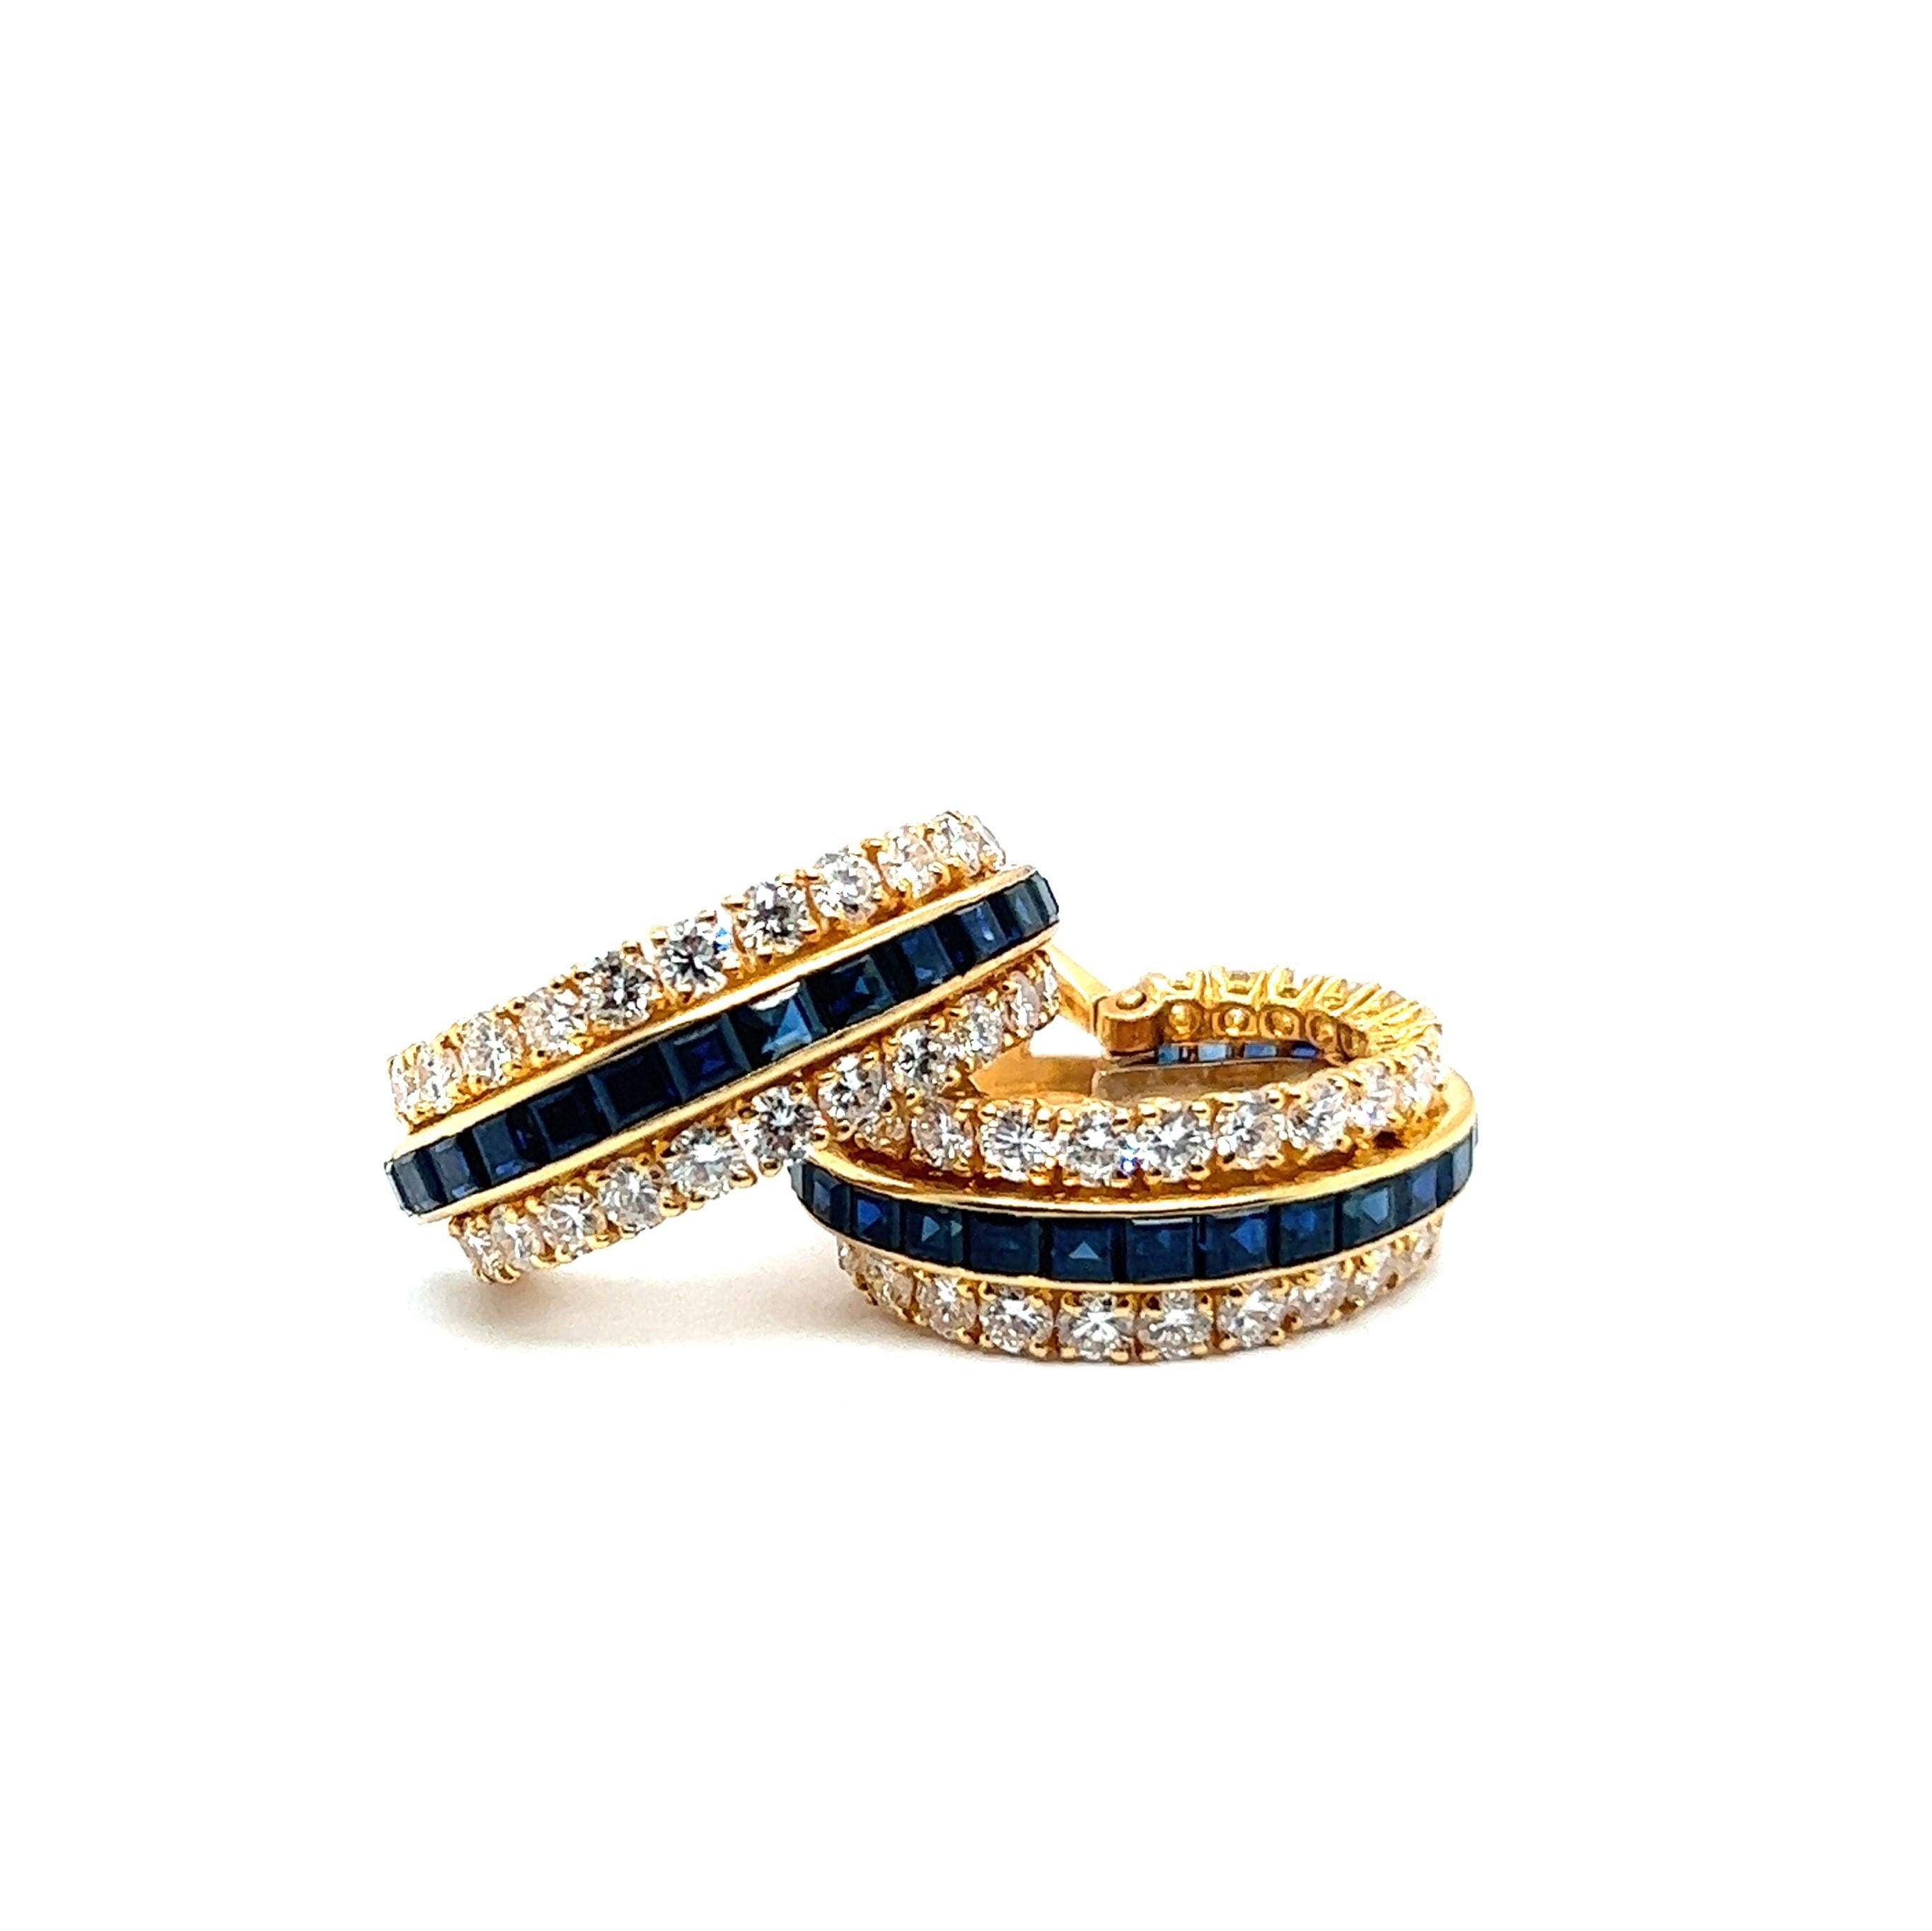 Elegant Van Cleef & Arpels Earclips in 18K Gold with Sapphires and Diamonds 5